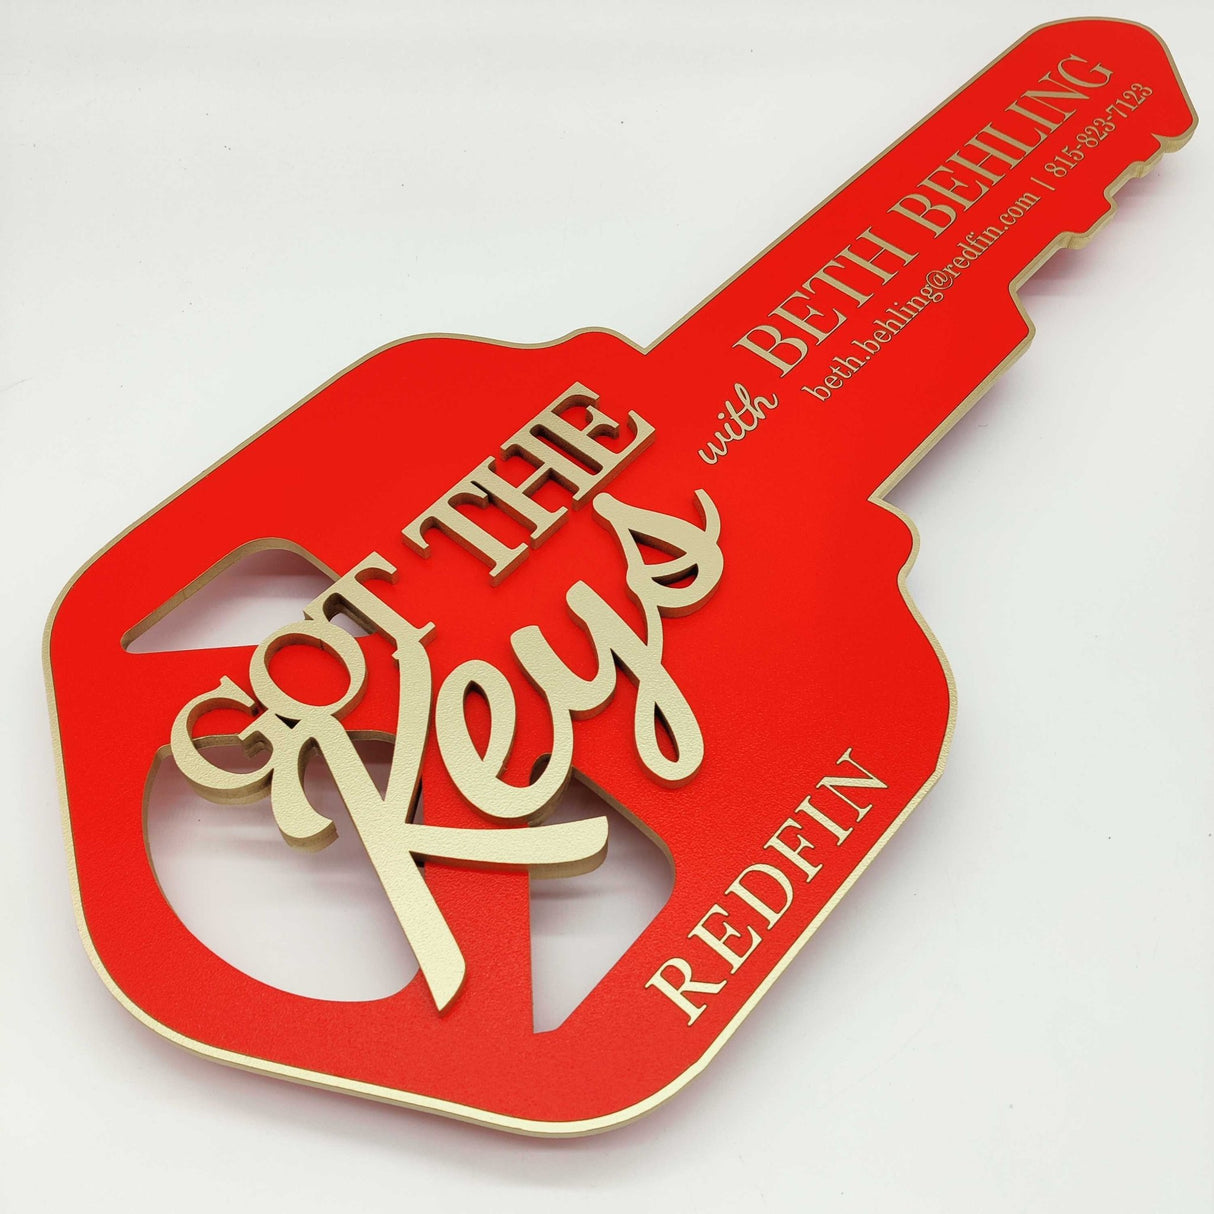 Key Shaped Props Got the keys Sign - Real Estate Store